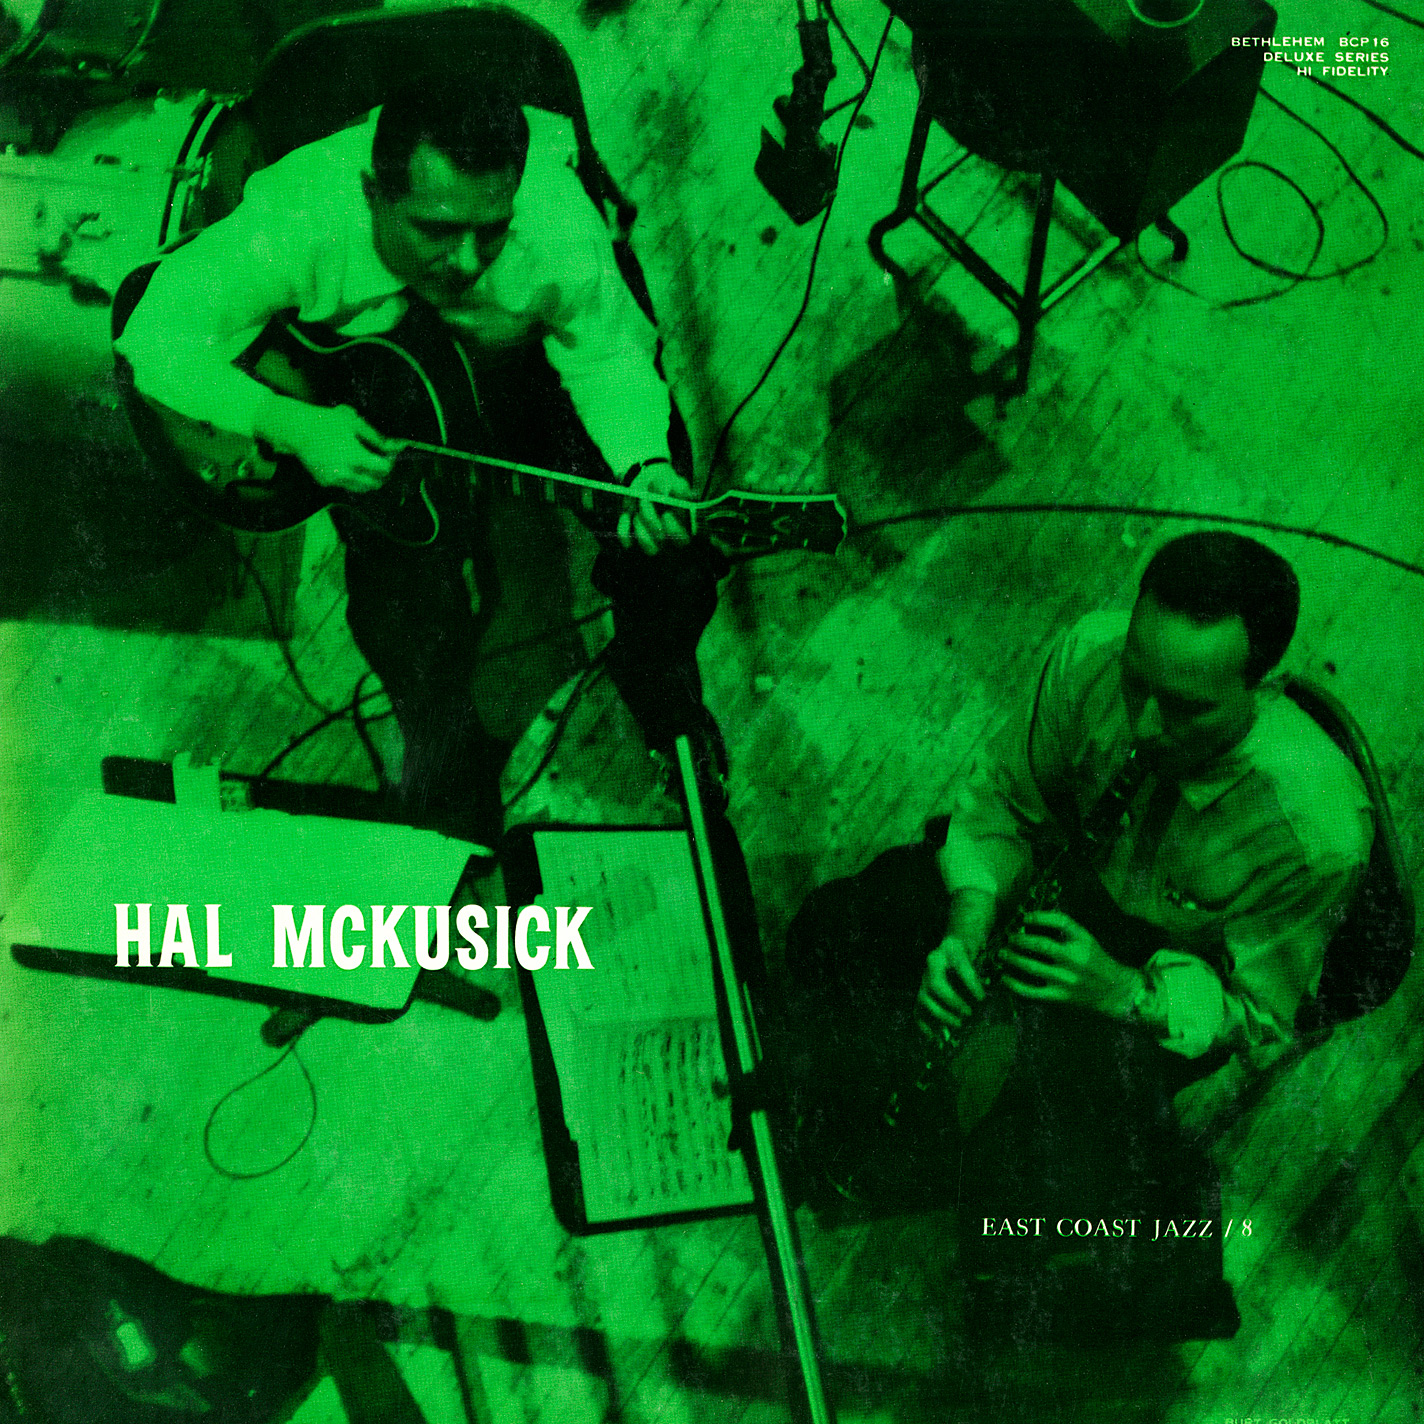 East Coast Jazz, Vol.8 - Hal McKusick (1955/2014) [PrestoClassical FLAC 24bit/96kHz]